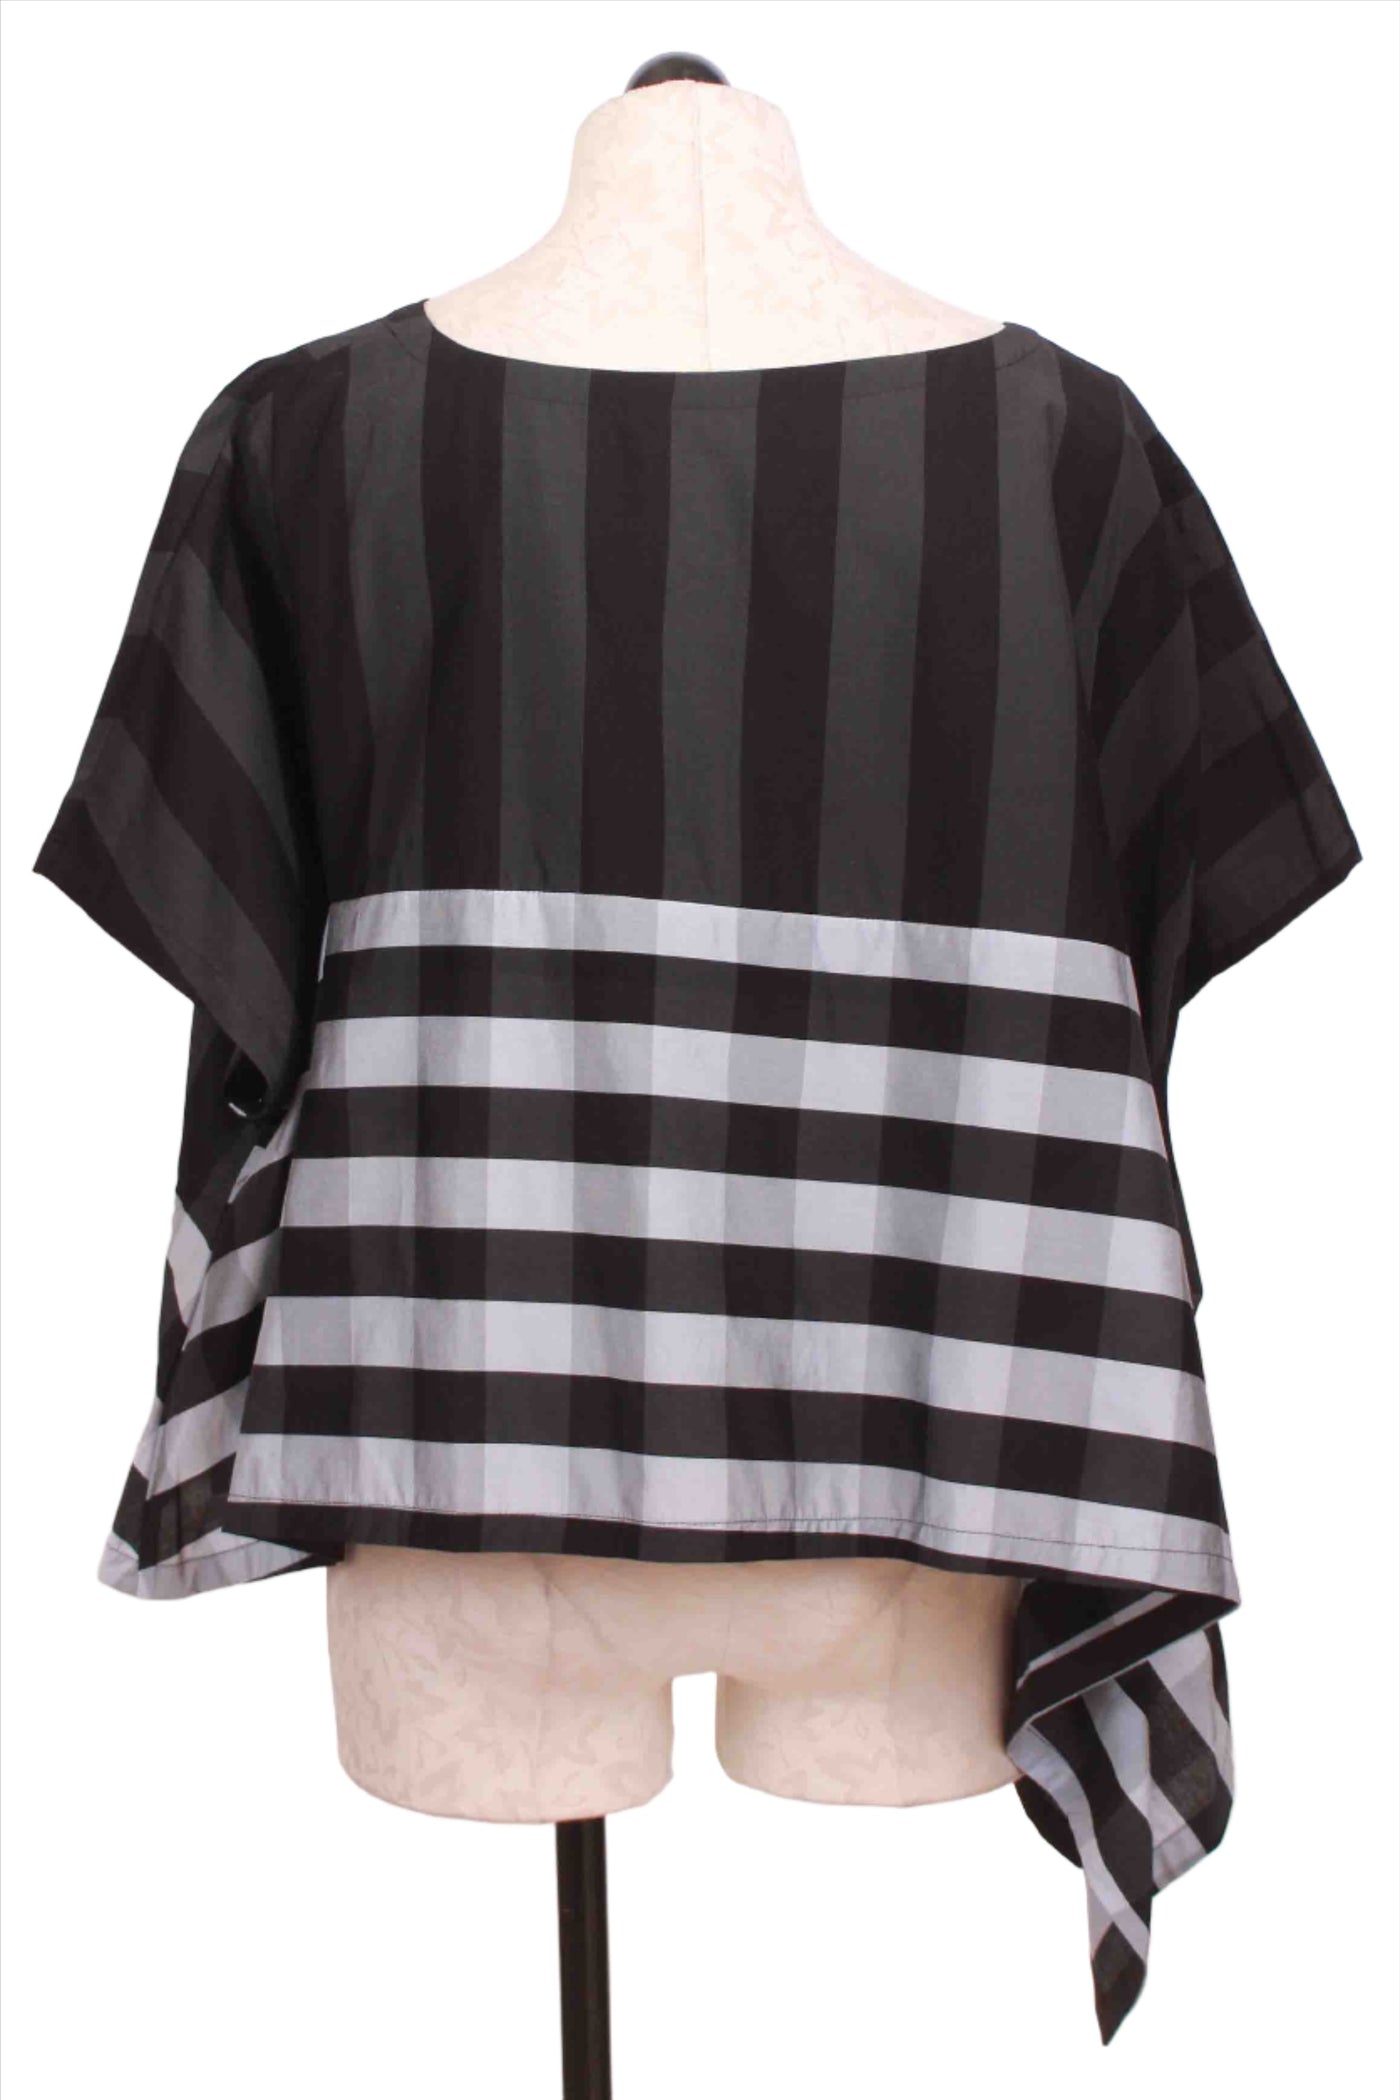 back view of Black/Grey/White Mixed Plaid and Stripe Taffeta Top by Moyuru